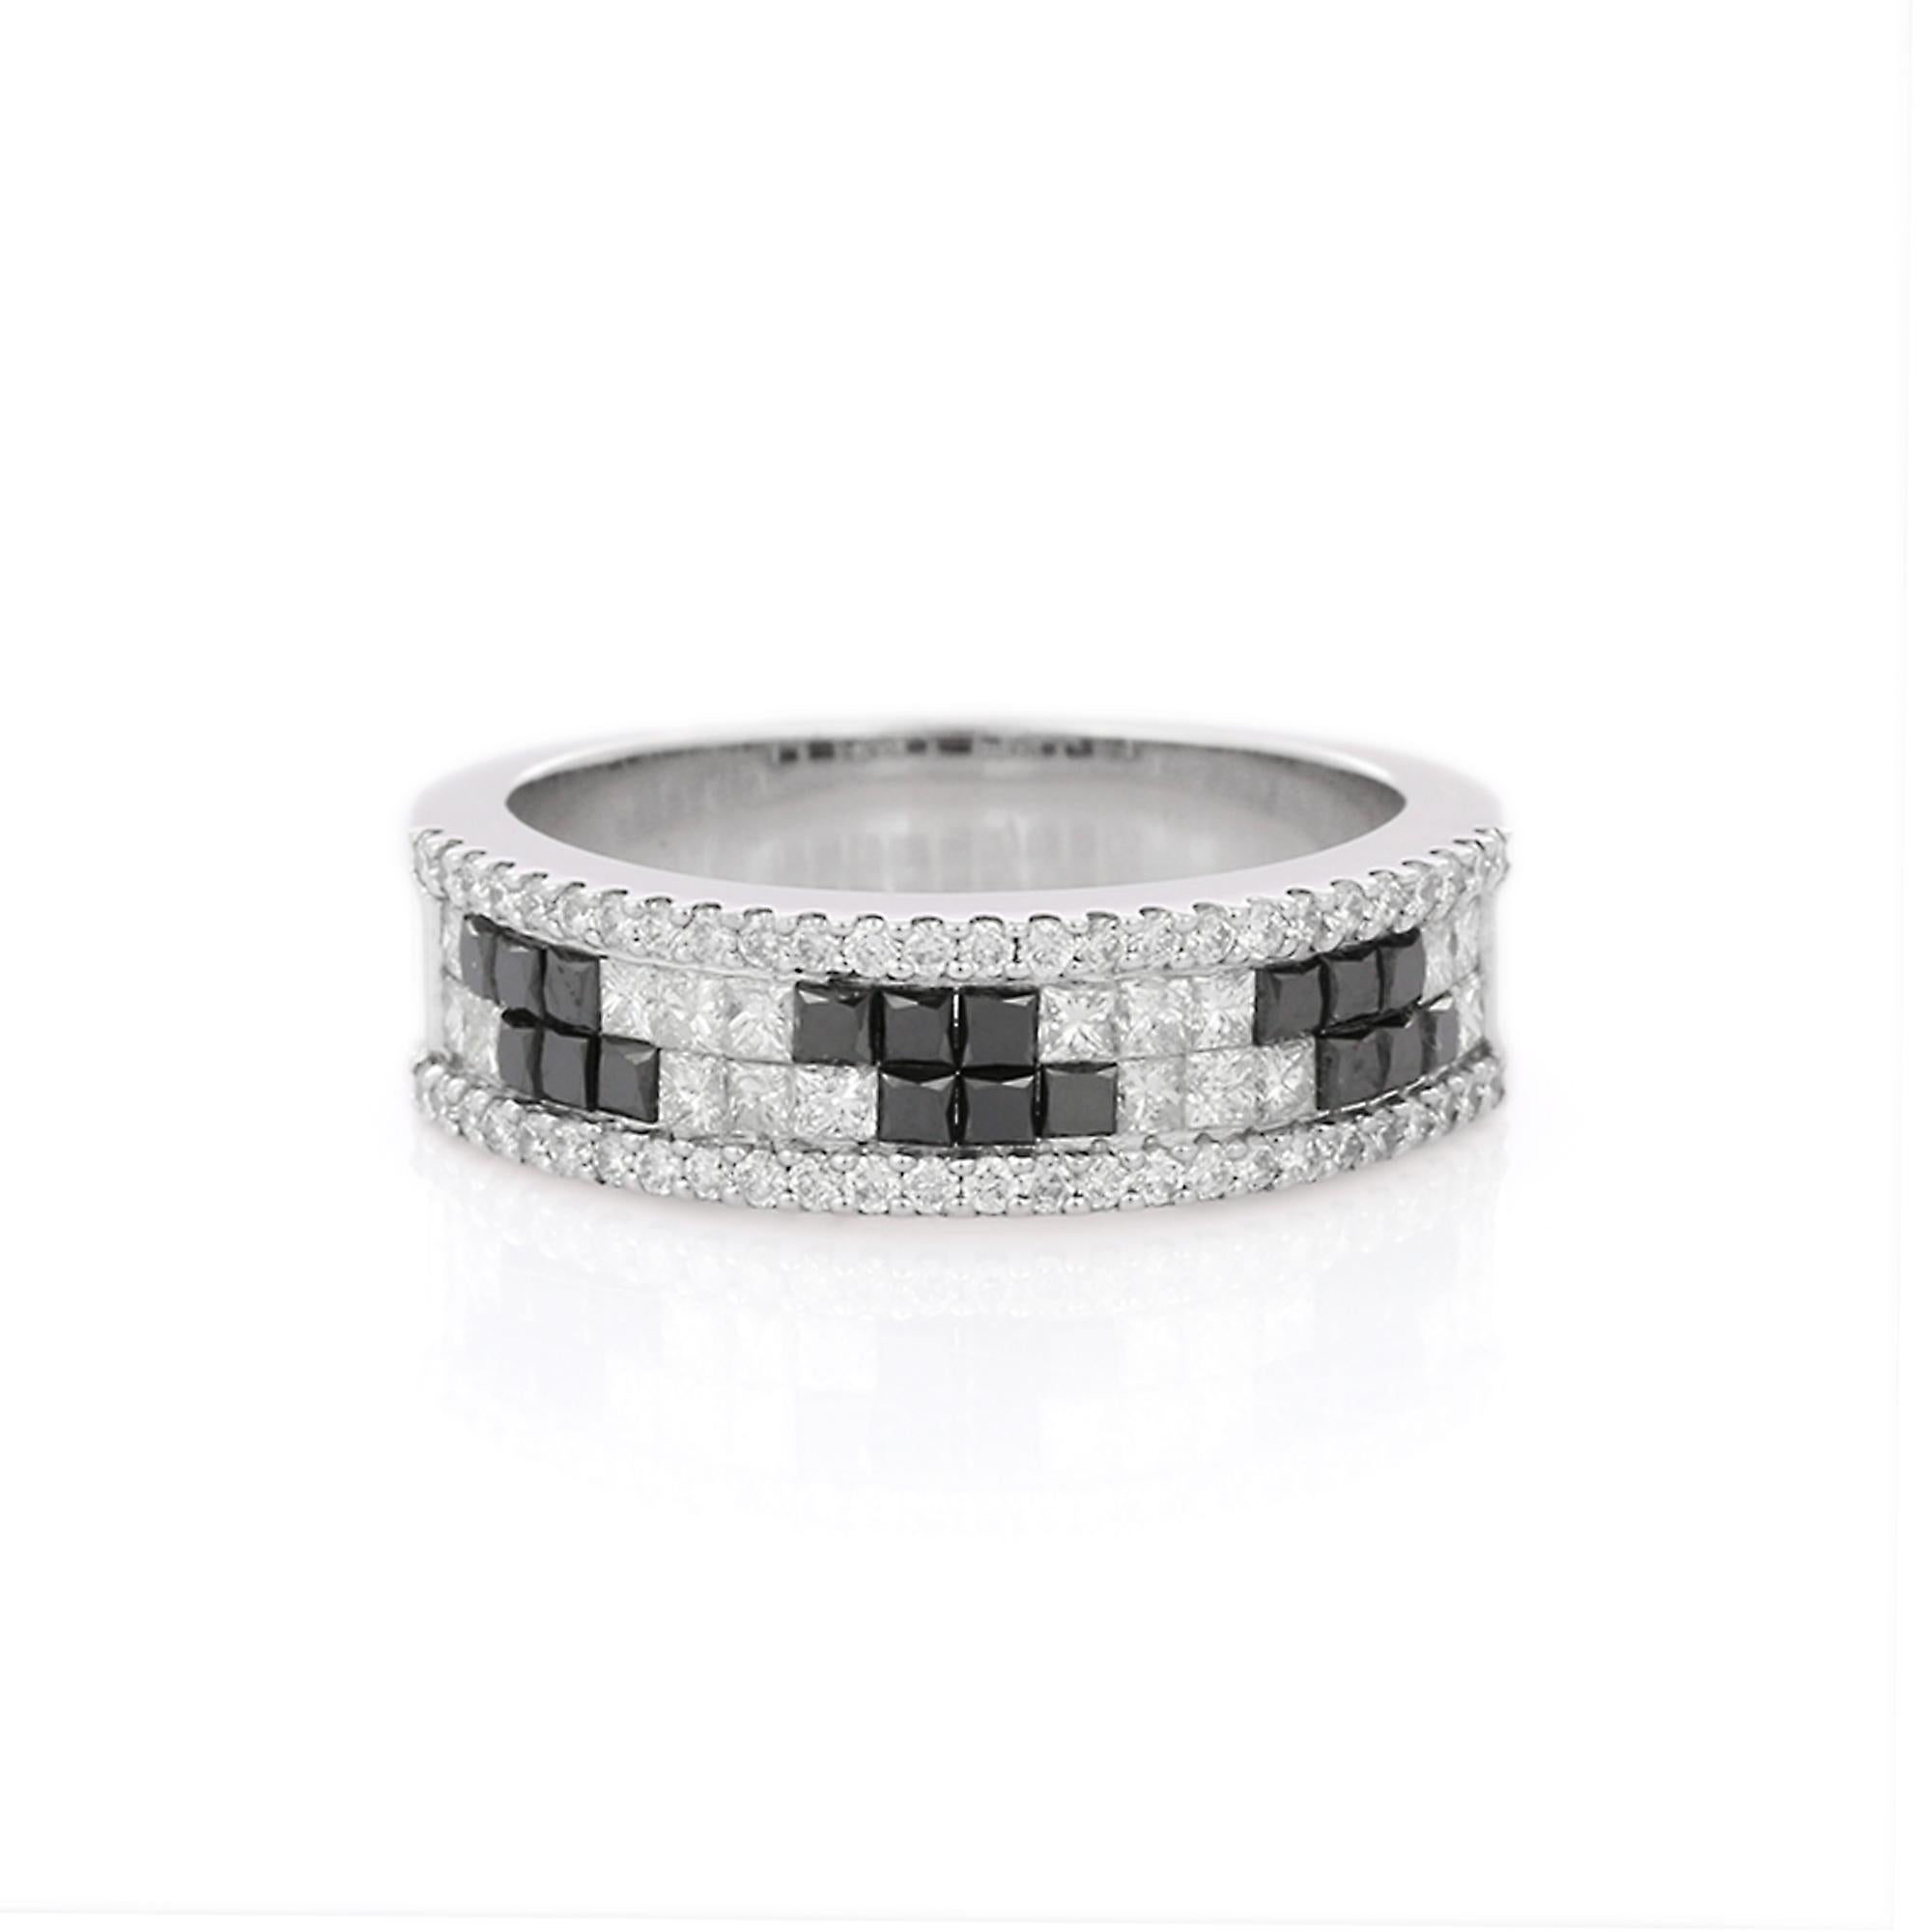 For Sale:  Unisex Black White Diamond Engagement Band Ring Gift for Him in 18k White Gold  5